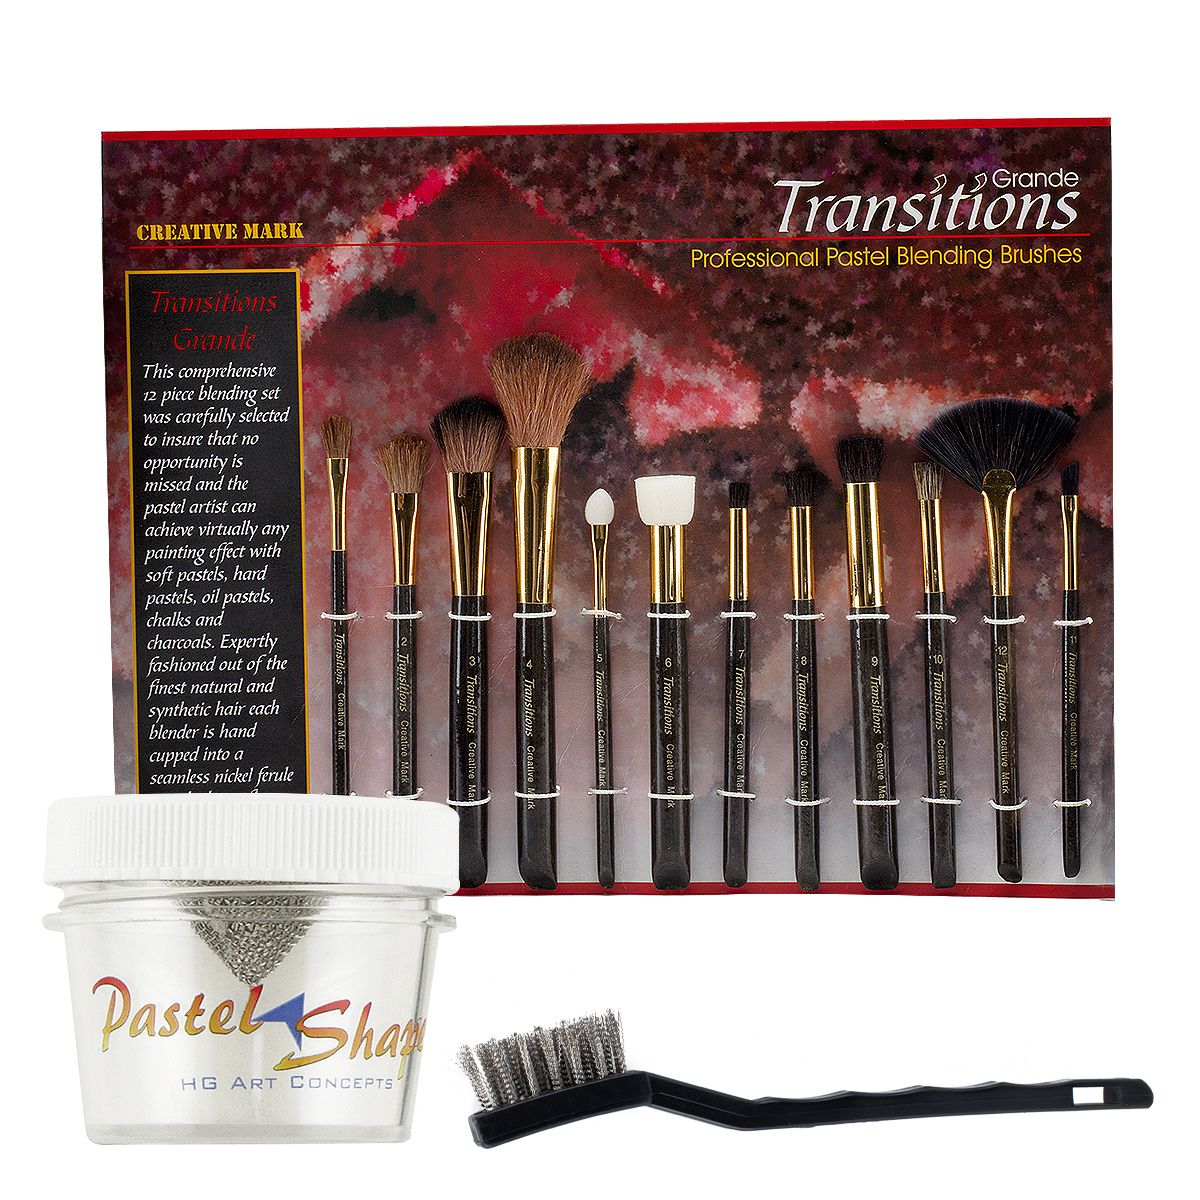 Pastel Shaper Complete Set with Grande Transitions Professional Pastel Blending Brushes